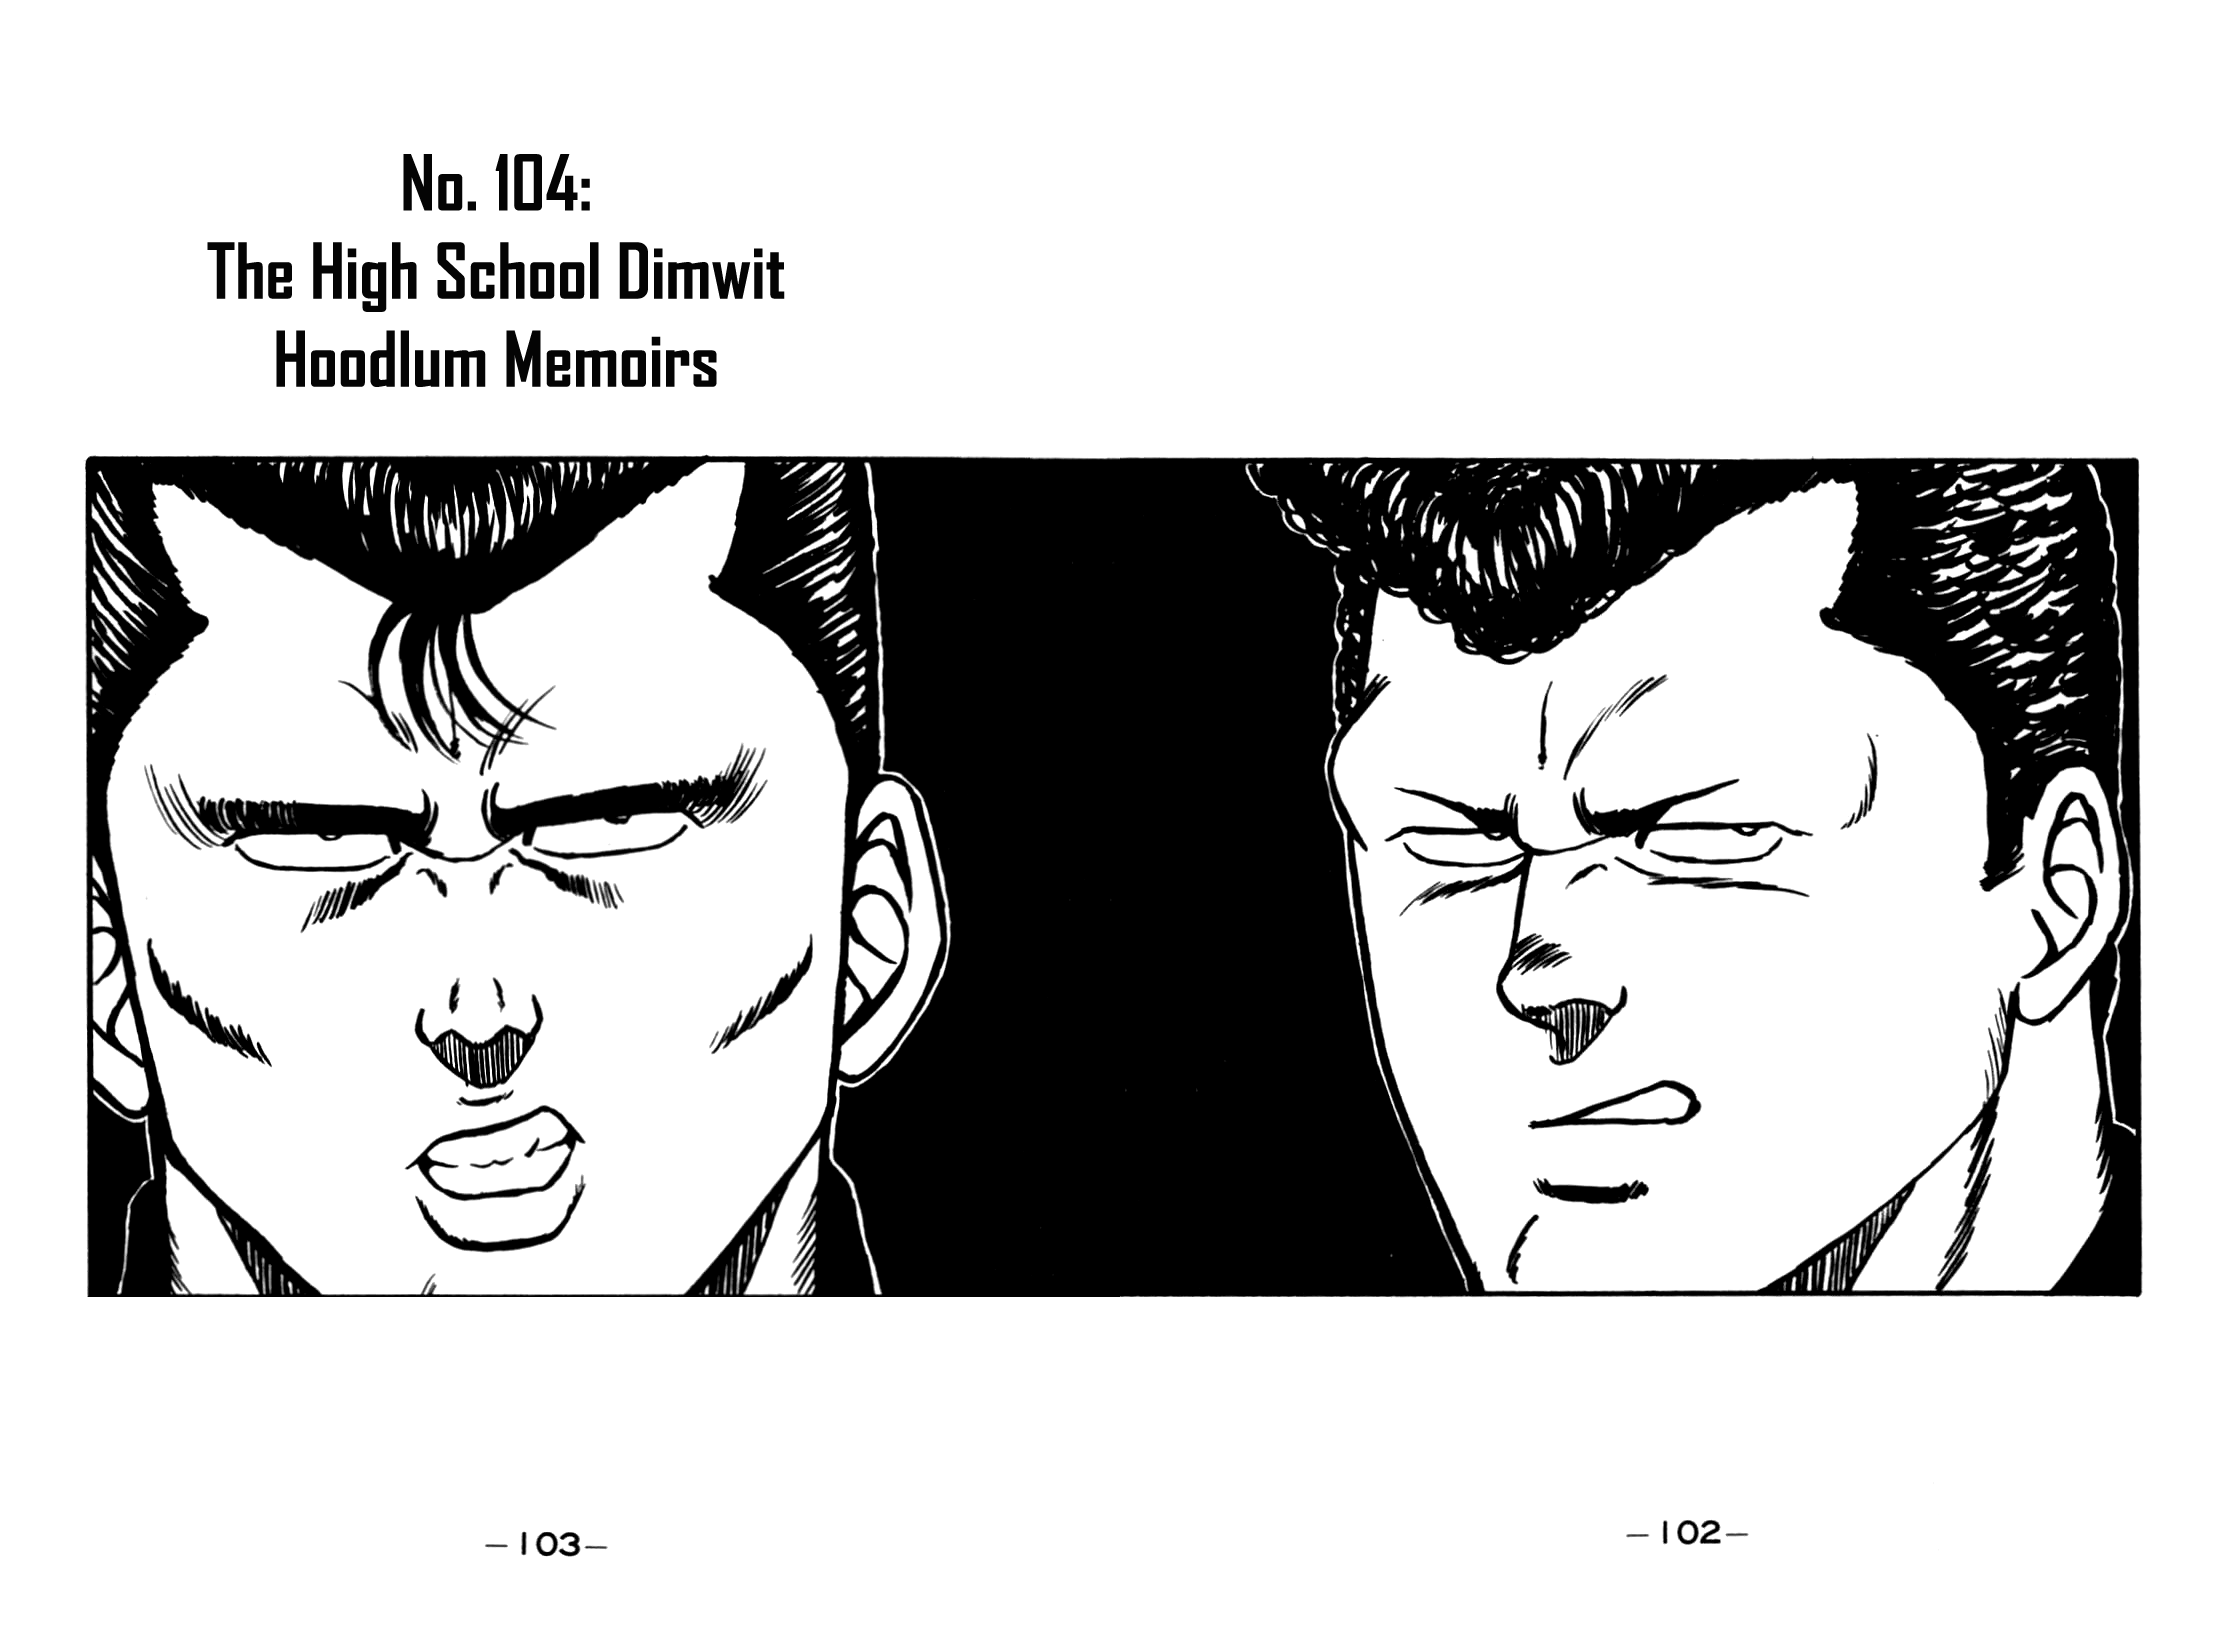 Be-Bop-Highschool Vol.12 Chapter 104: The High School Dimwit Hoodlum Memoirs